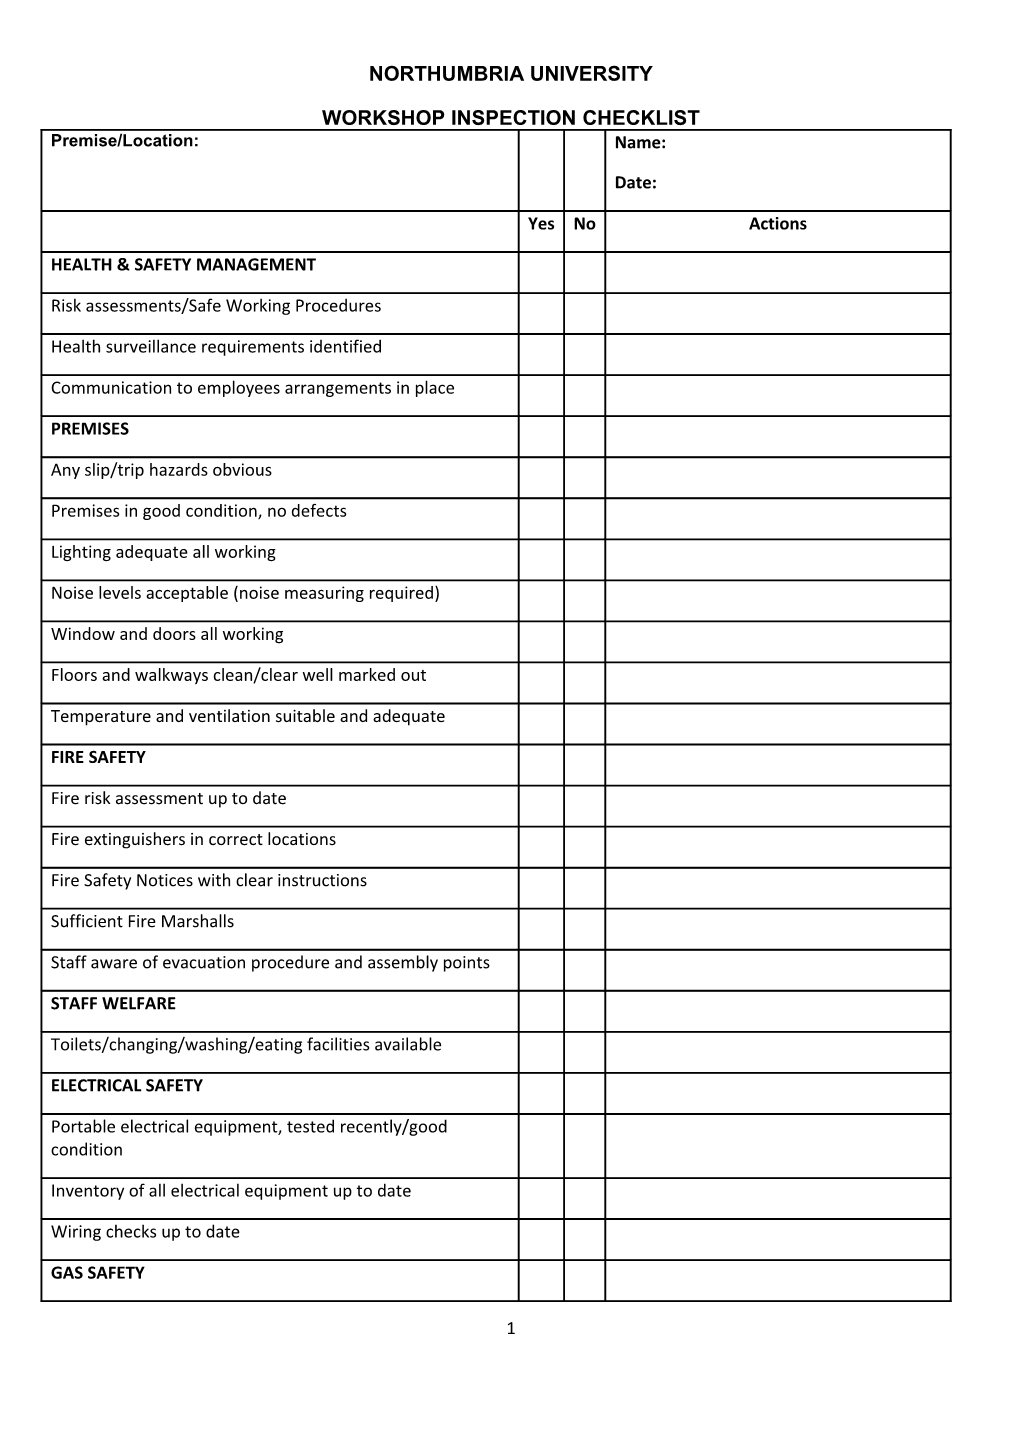 Northumbria University Workshop Inspection Checklist